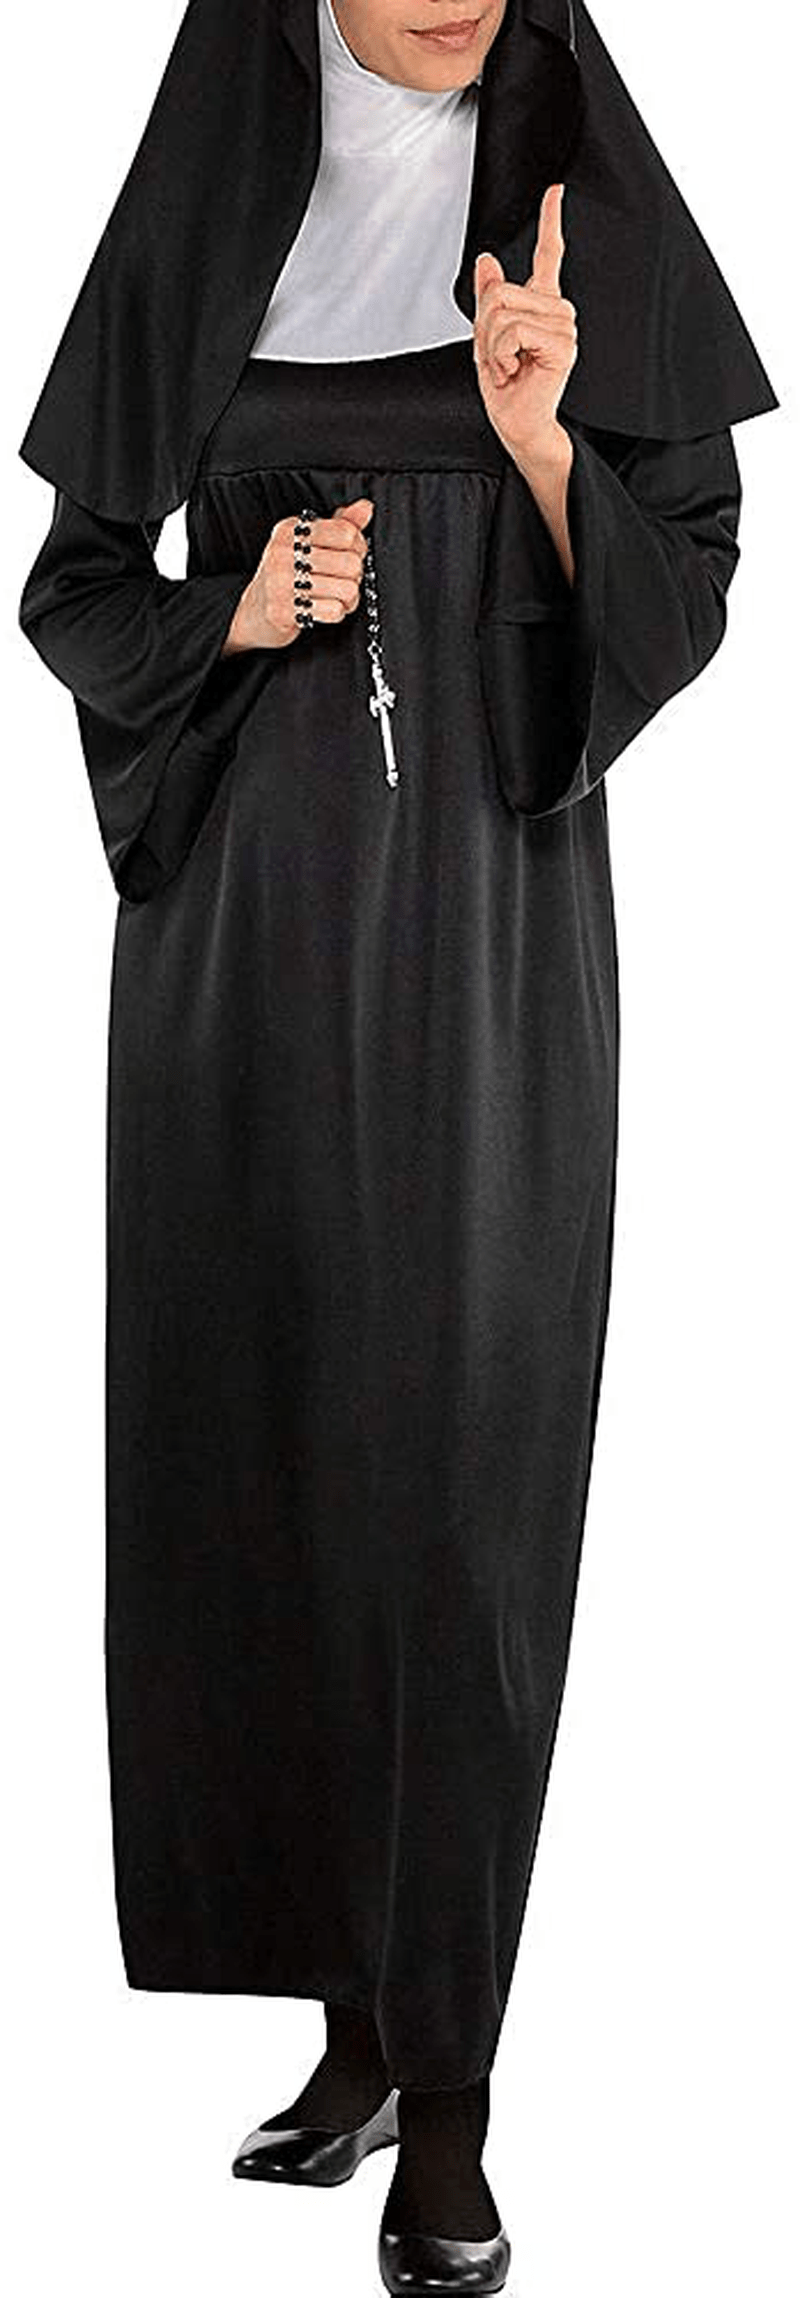 amscan Sister Adult Nun Costume Apparel & Accessories > Costumes & Accessories > Costumes amscan   